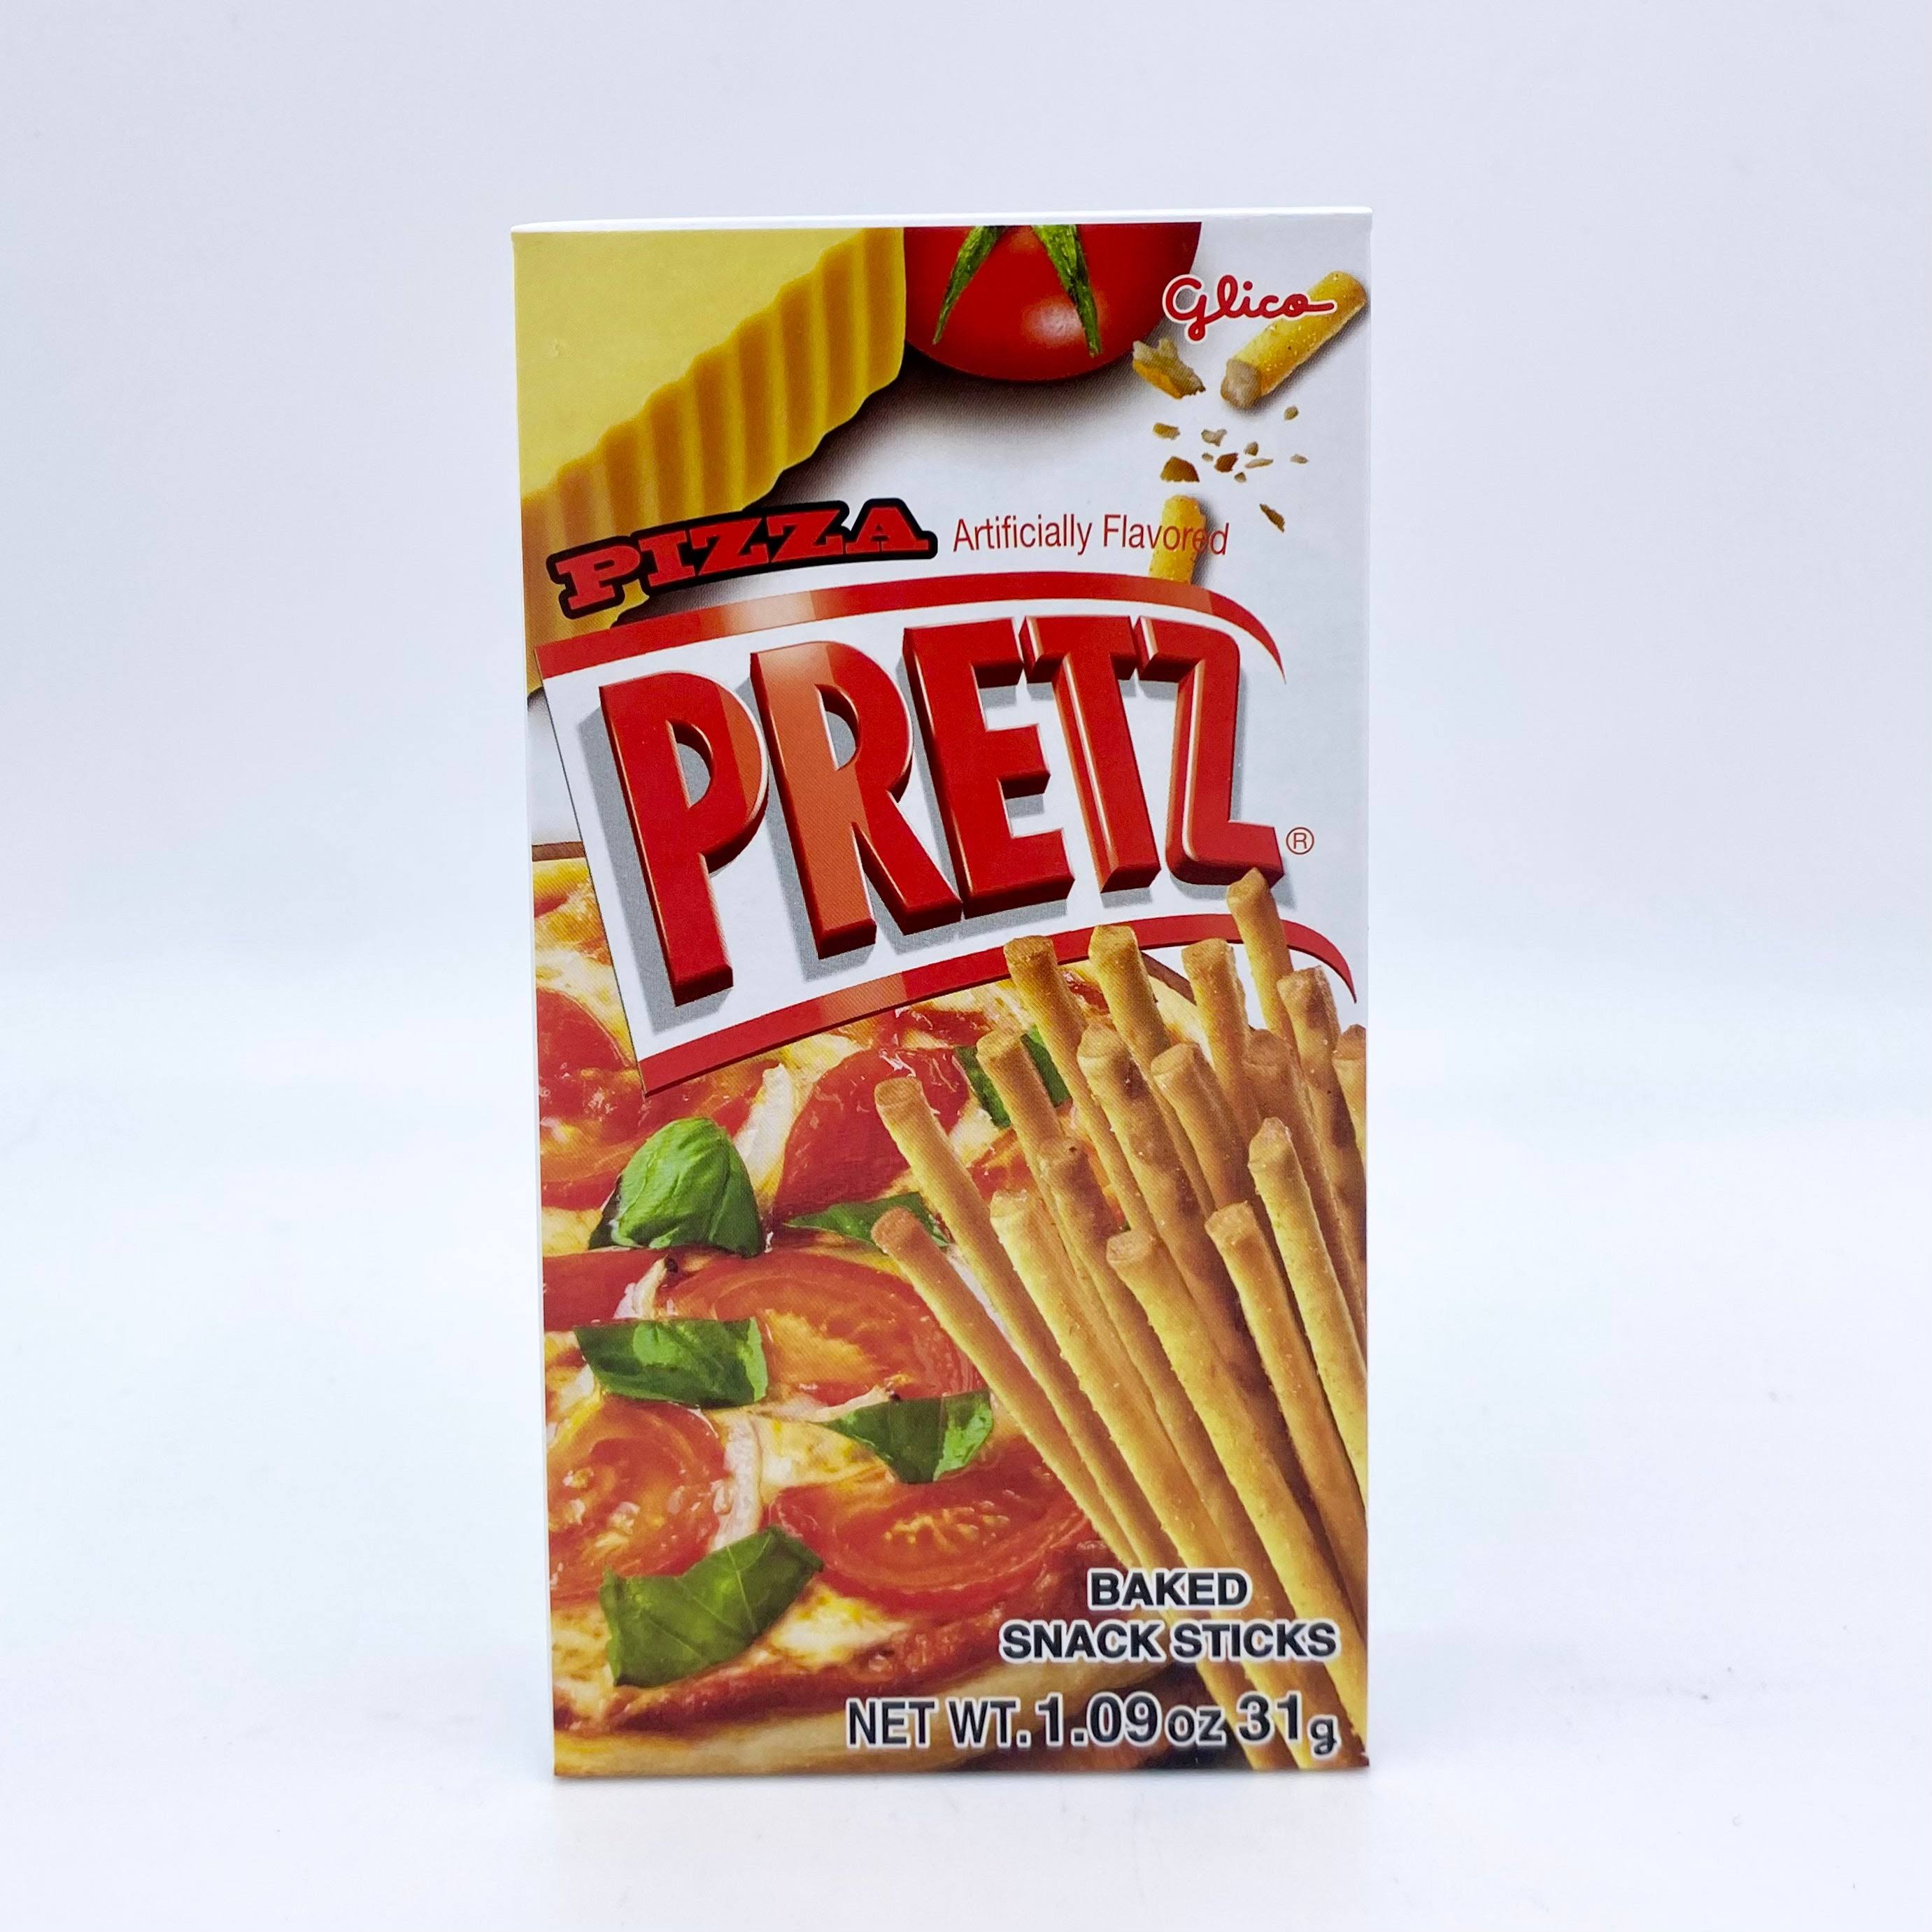 Glico Pretz Baked Snack Sticks - Pizza, 31g